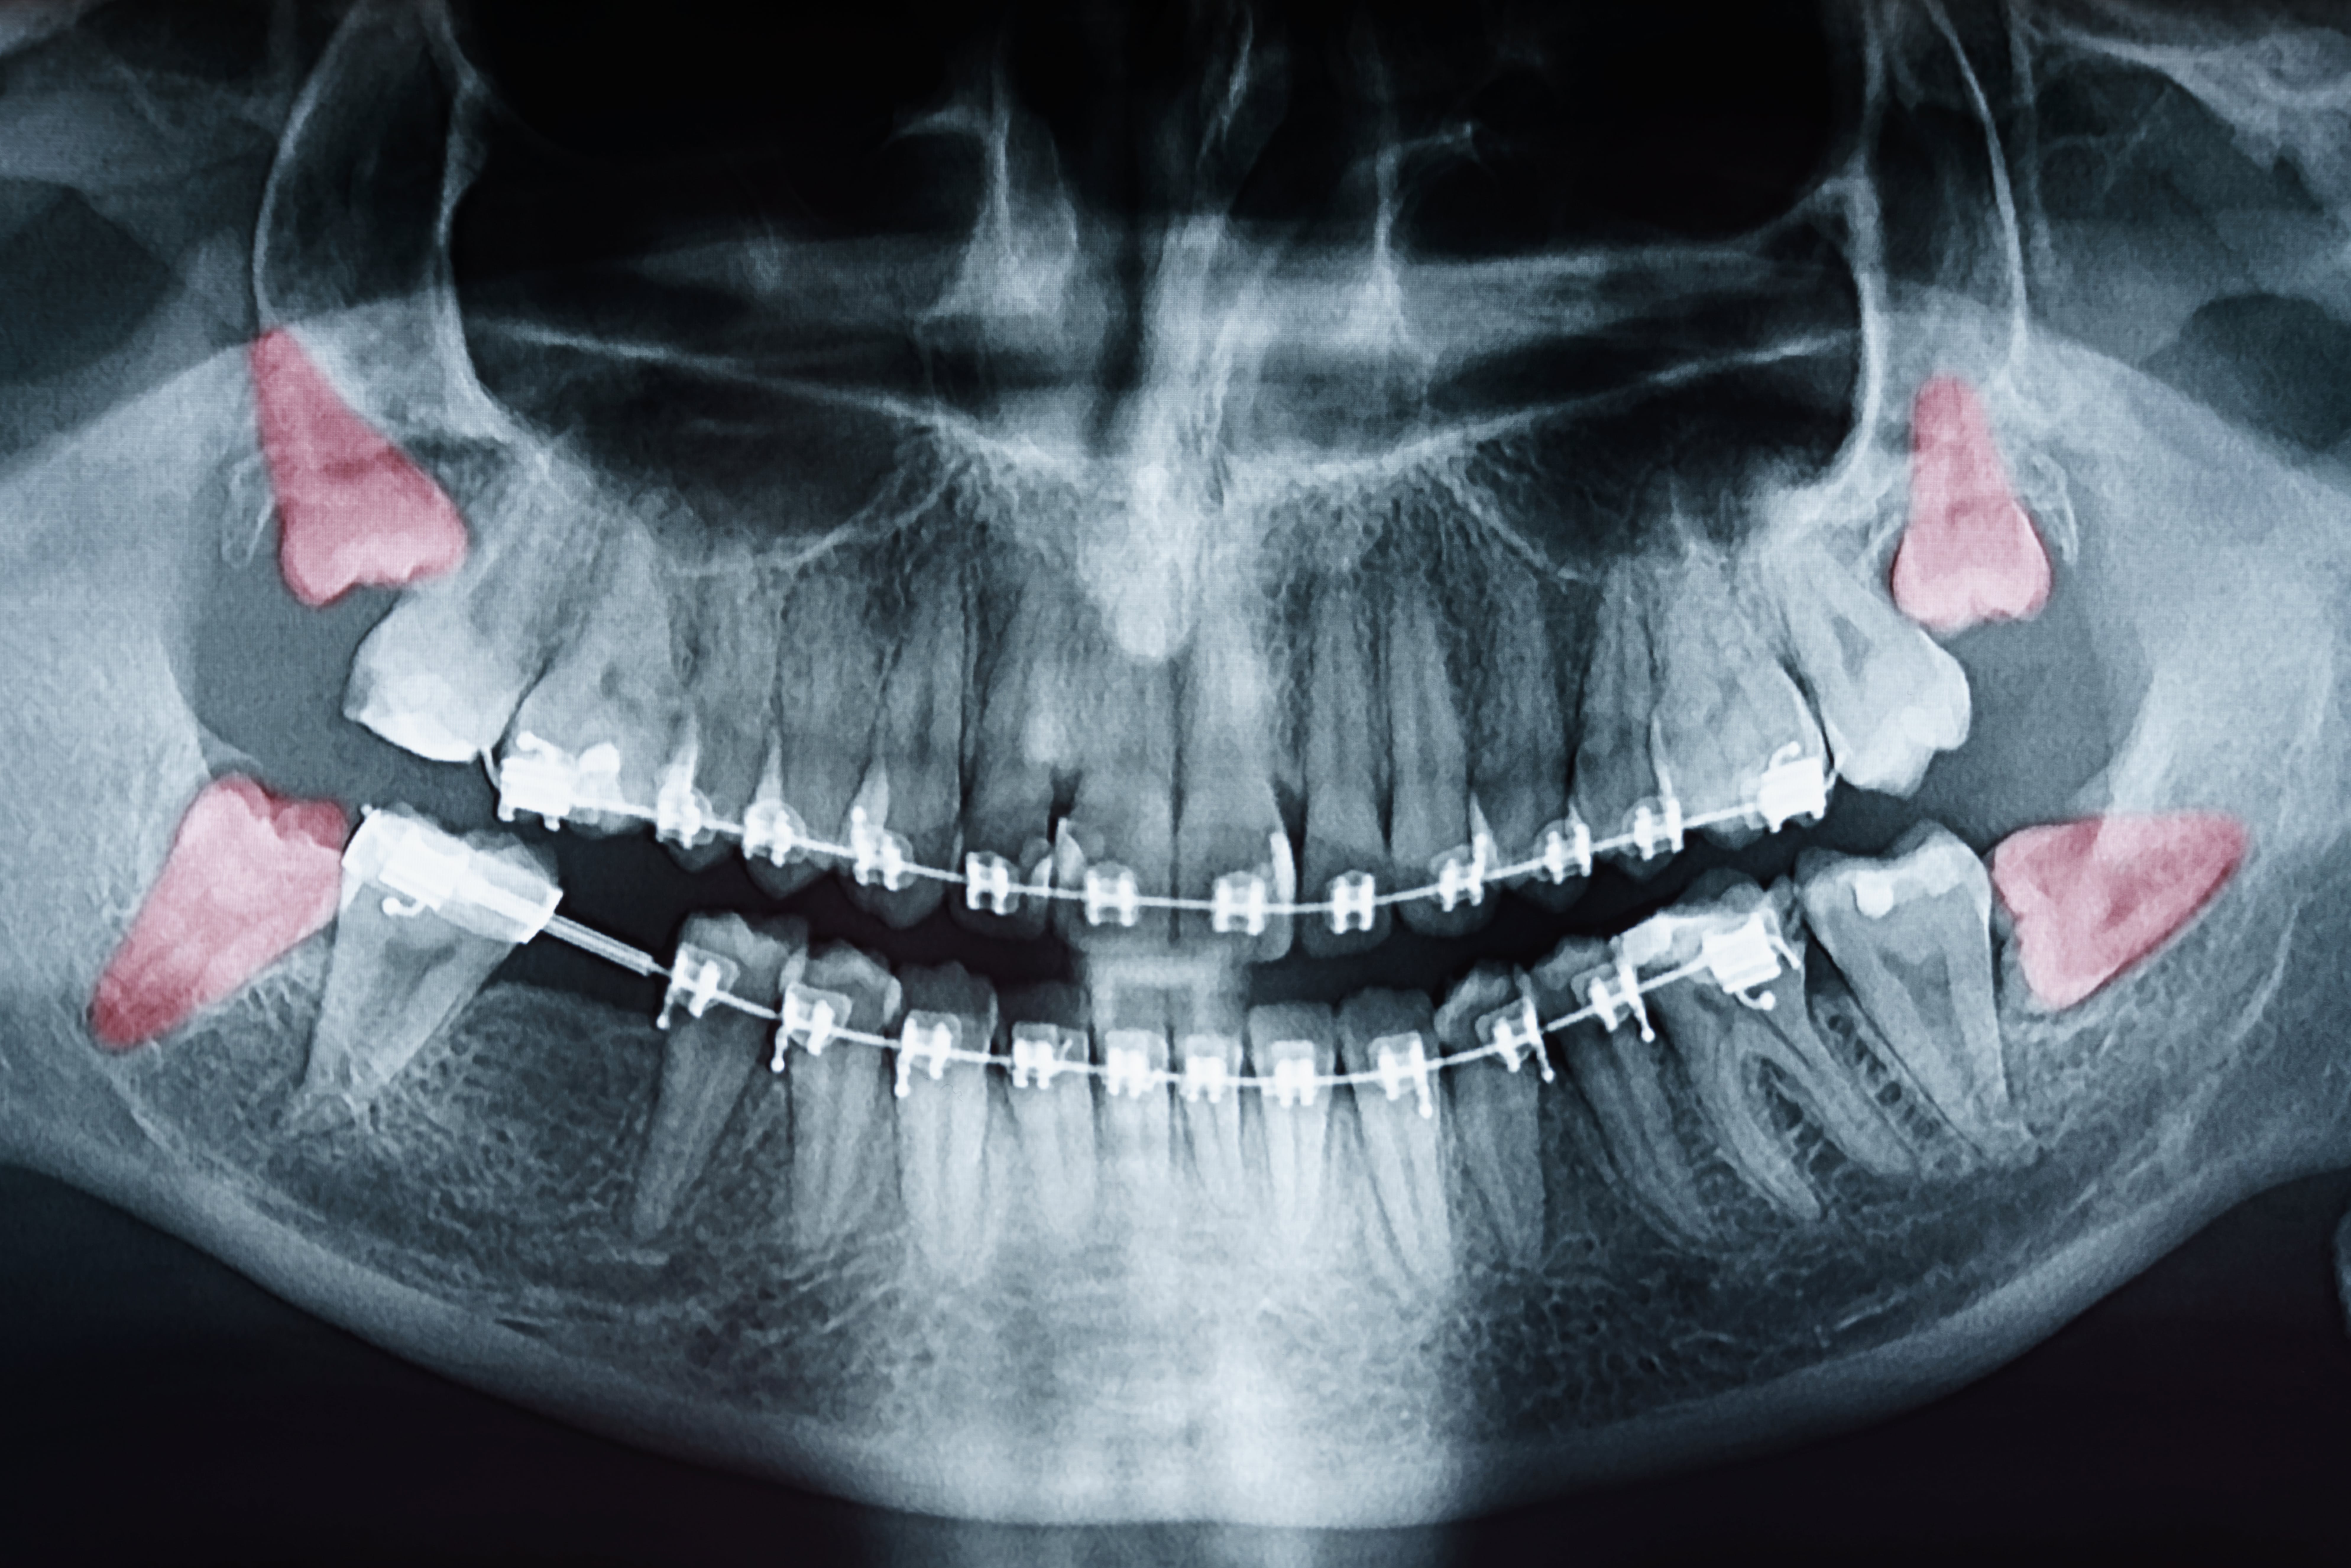 Santa Rosa Oral Surgeons Don't Want Wisdom Teeth To Harm Smiles